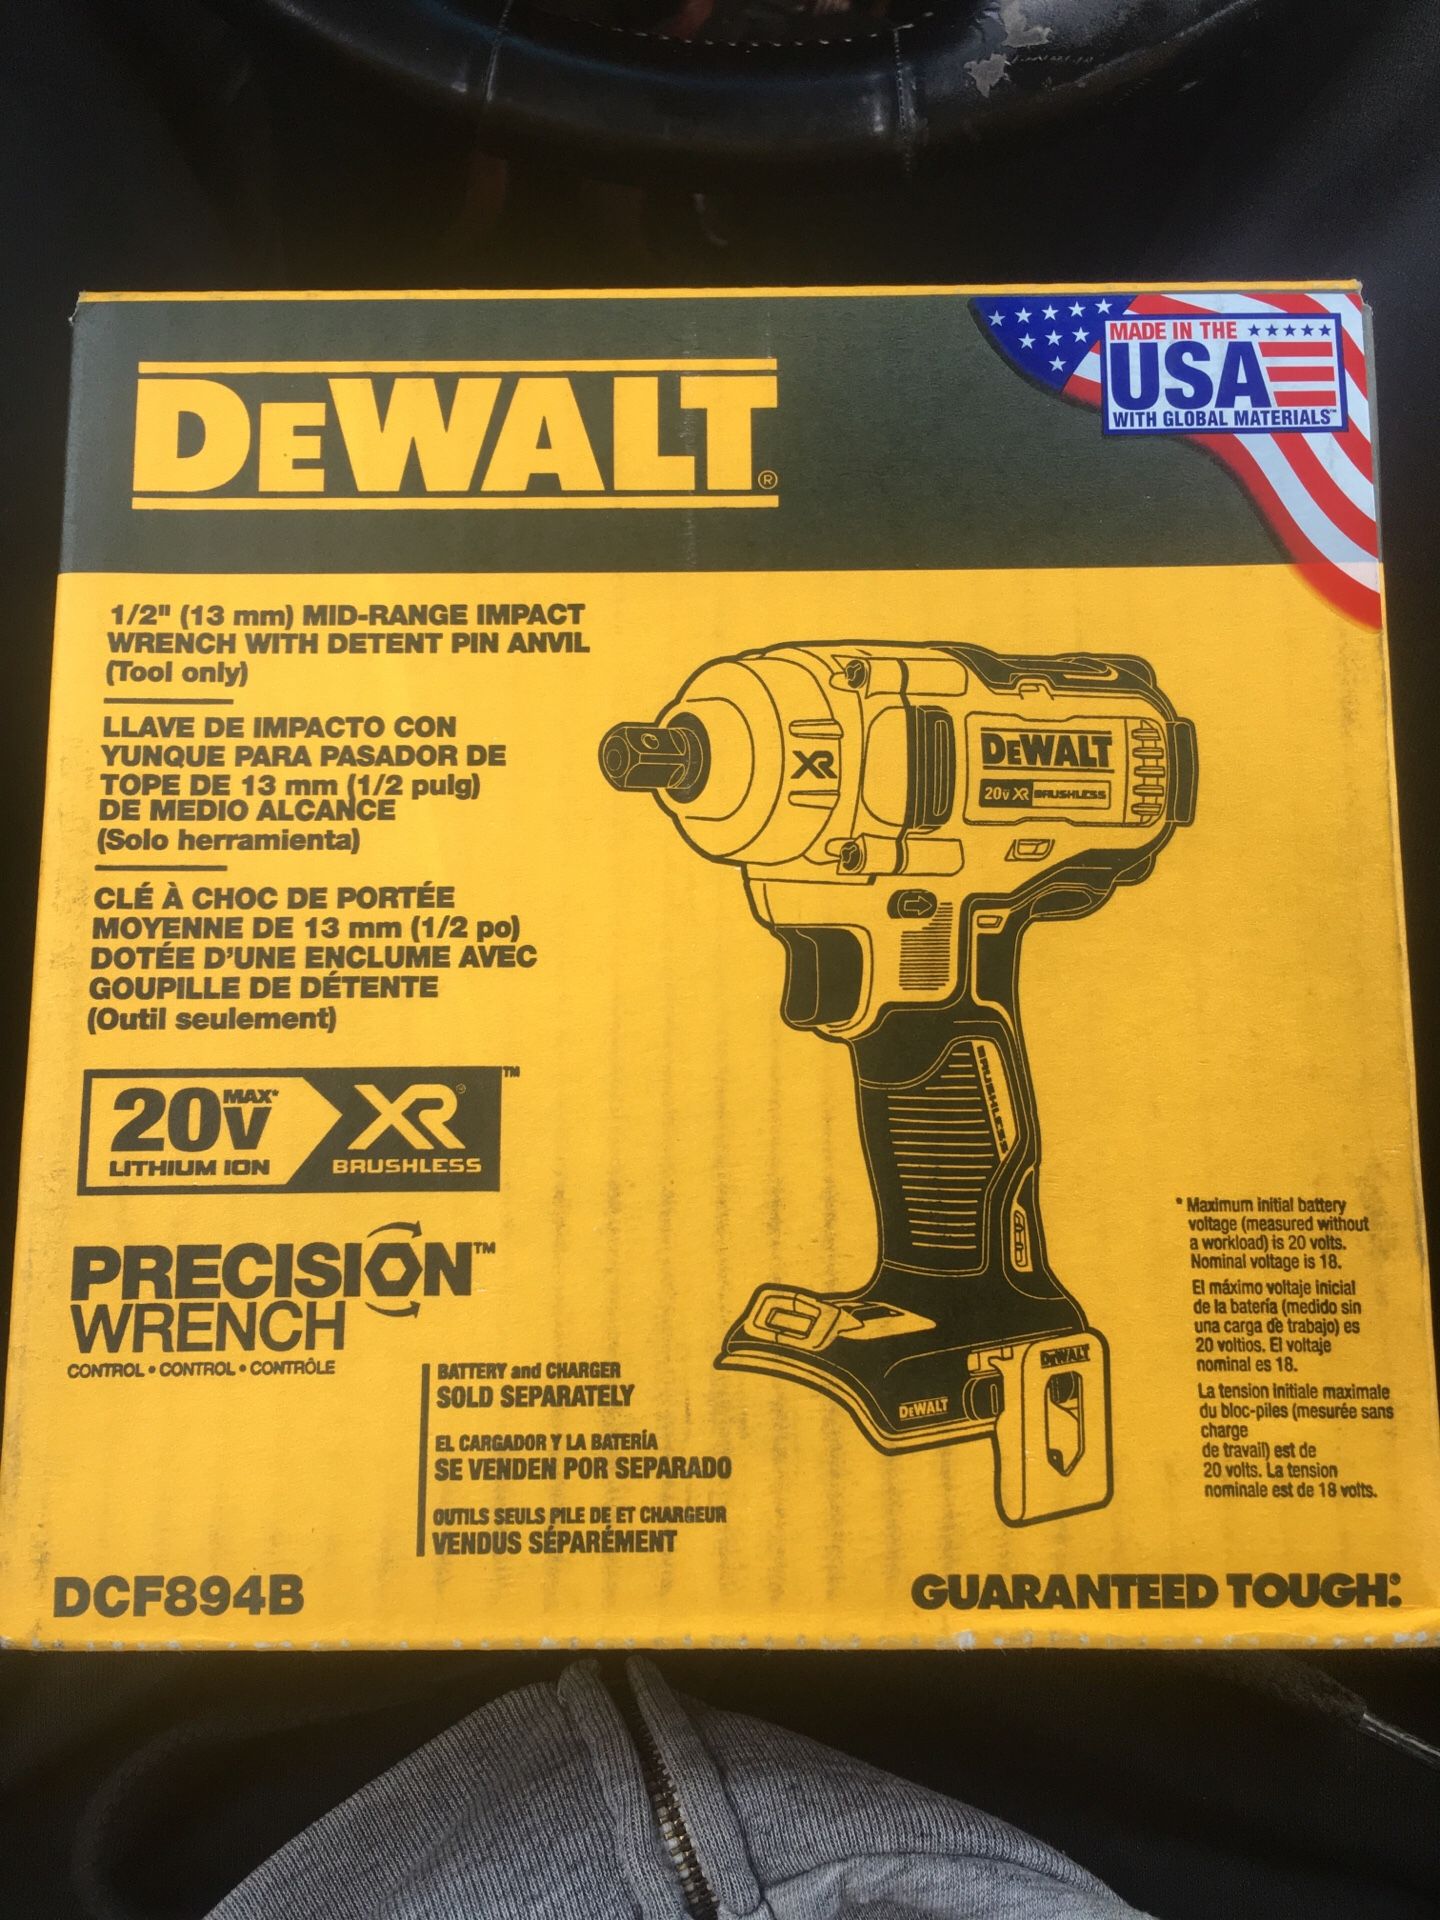 Dewalt 1/2” 20v max XR Brushless impact Wrench